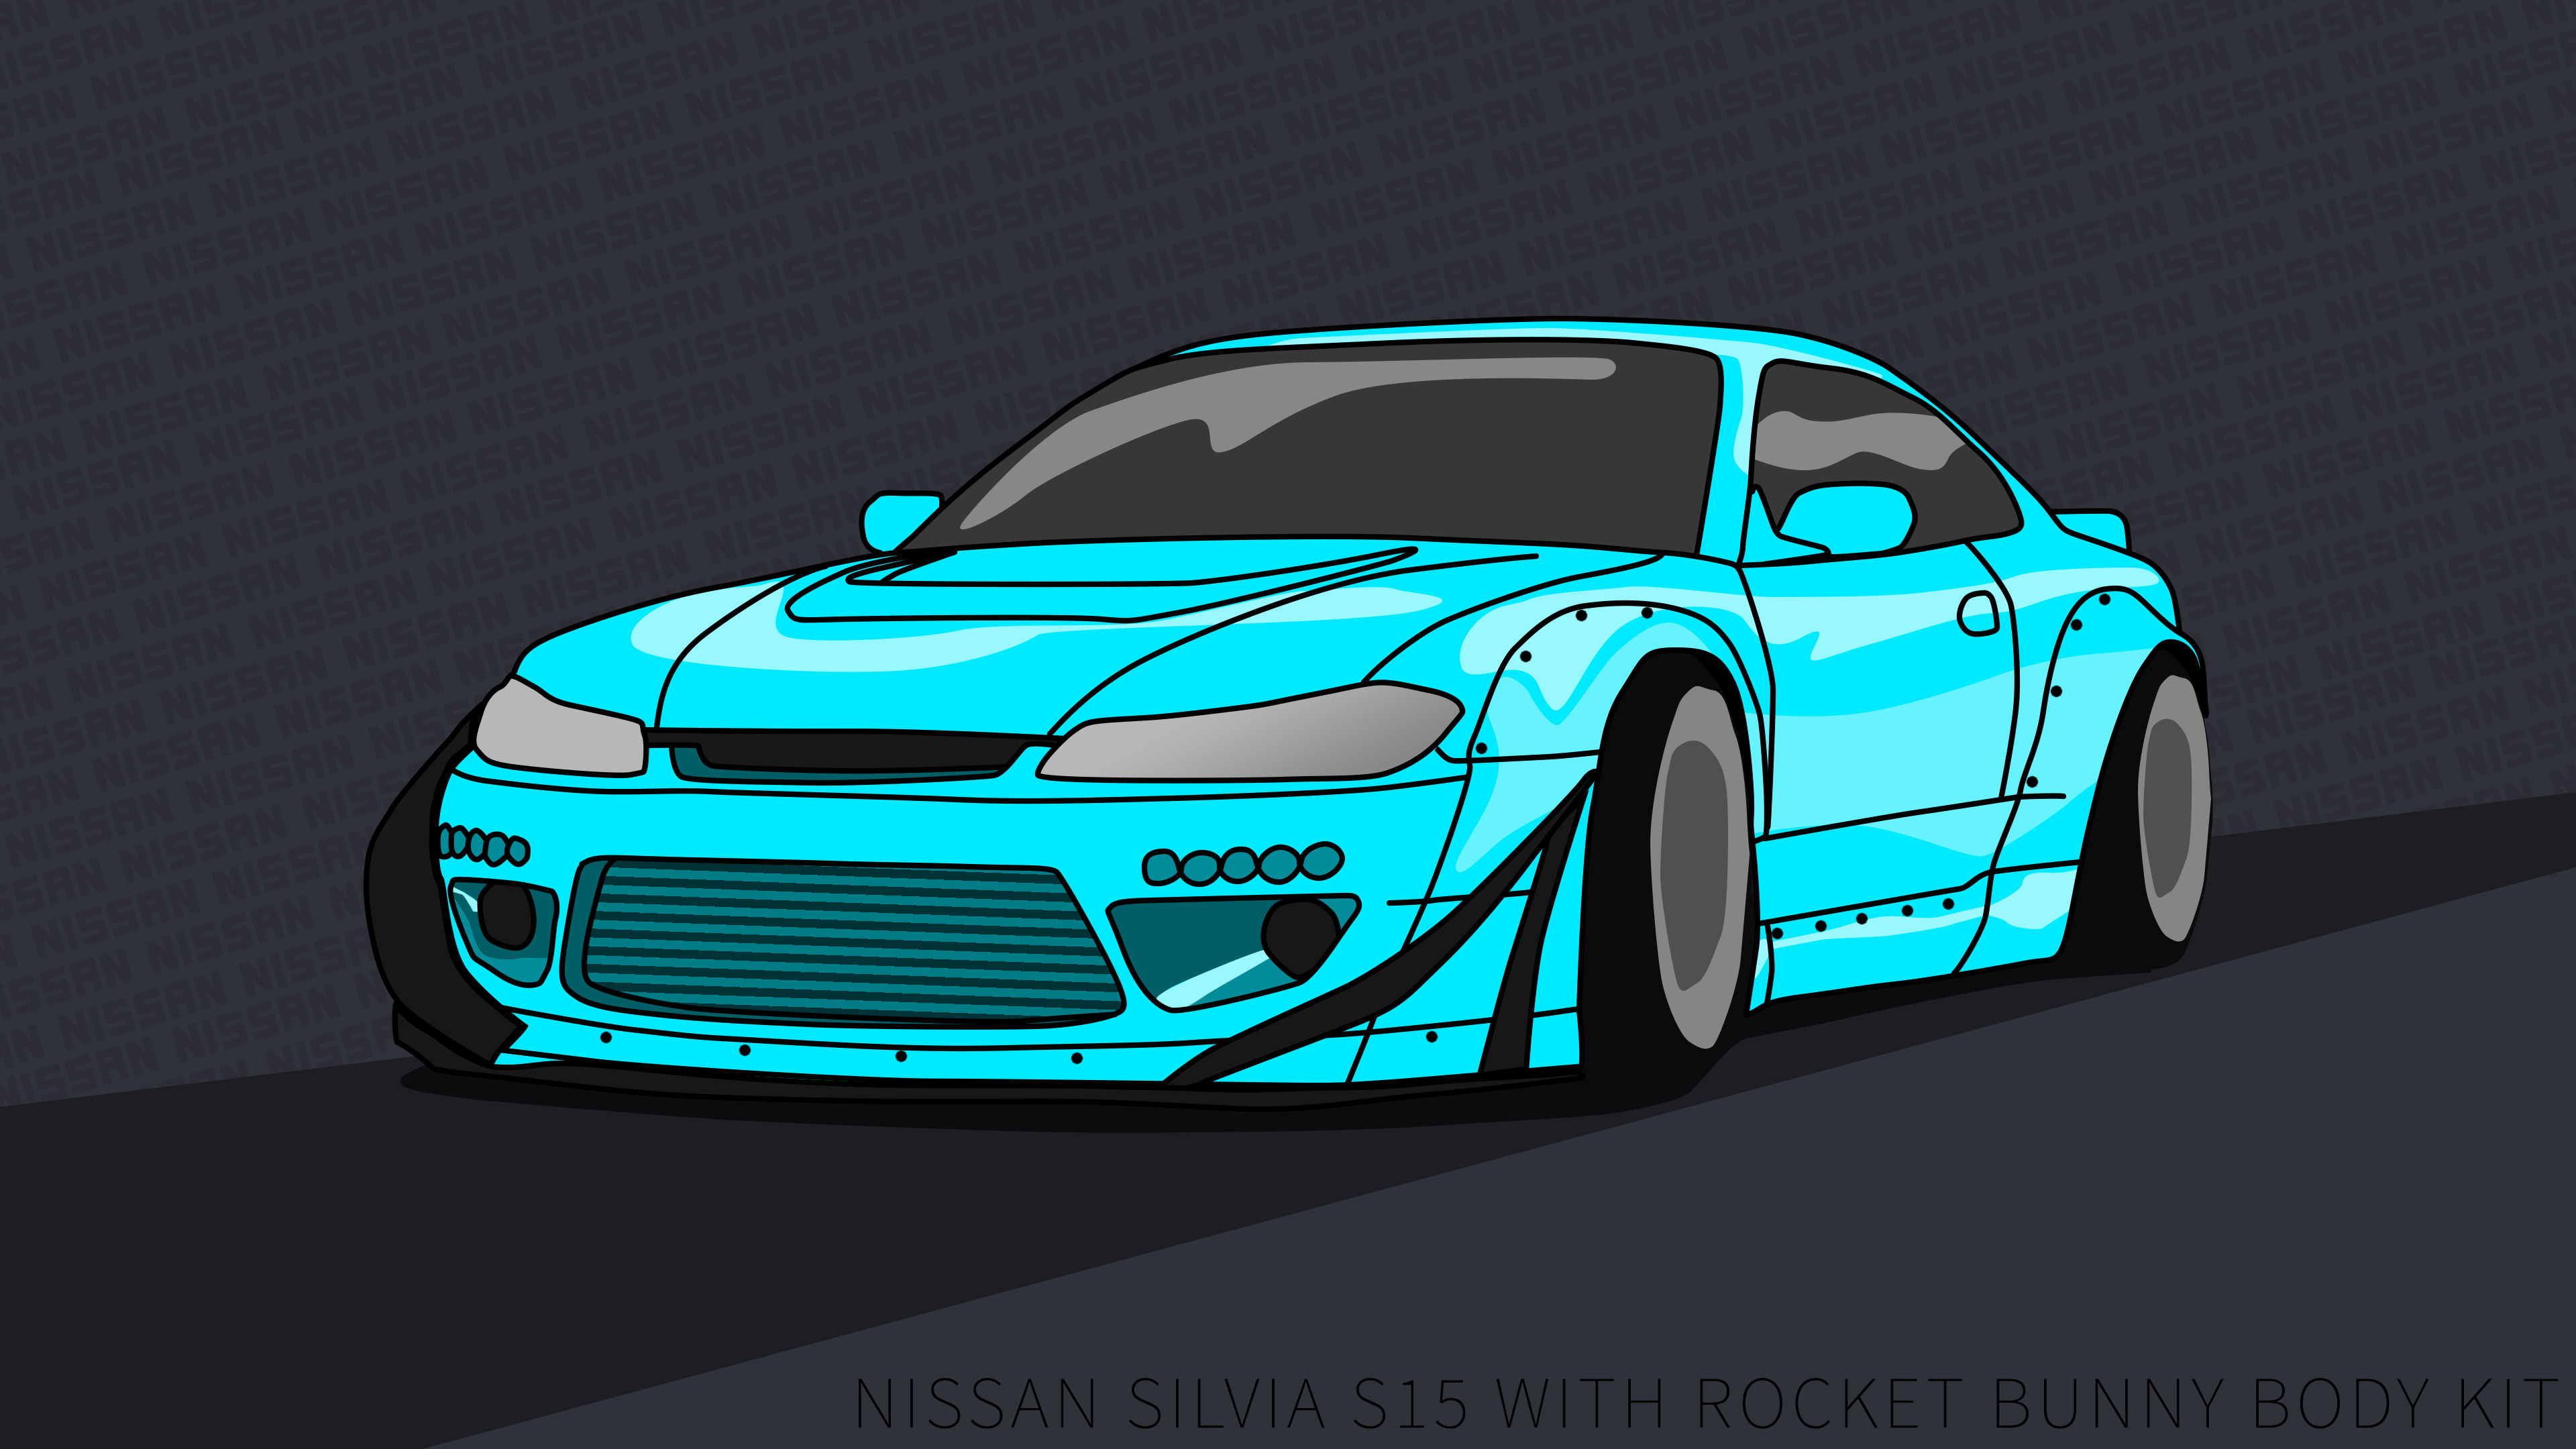 3840x2160 ... Nissan Silvia S15 wallpaper 4k rocket bunny LgtBlu by ItsBarney01